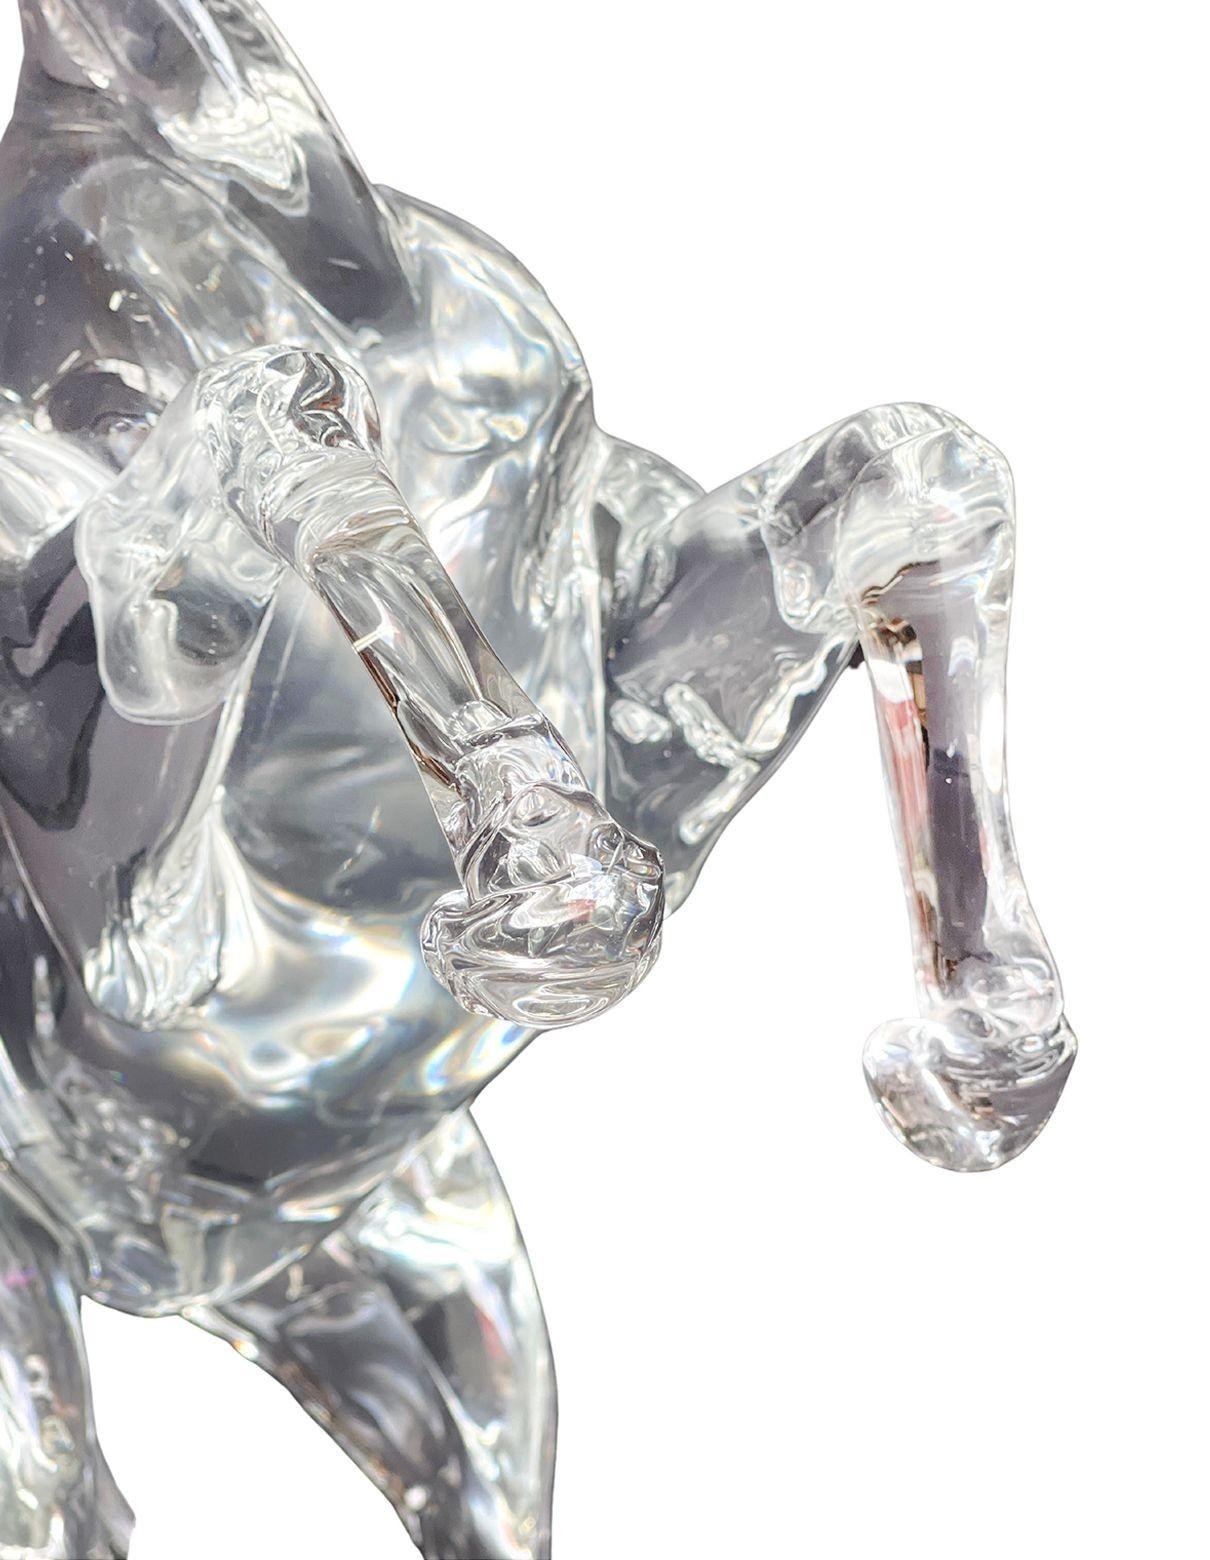 glass horse figurine